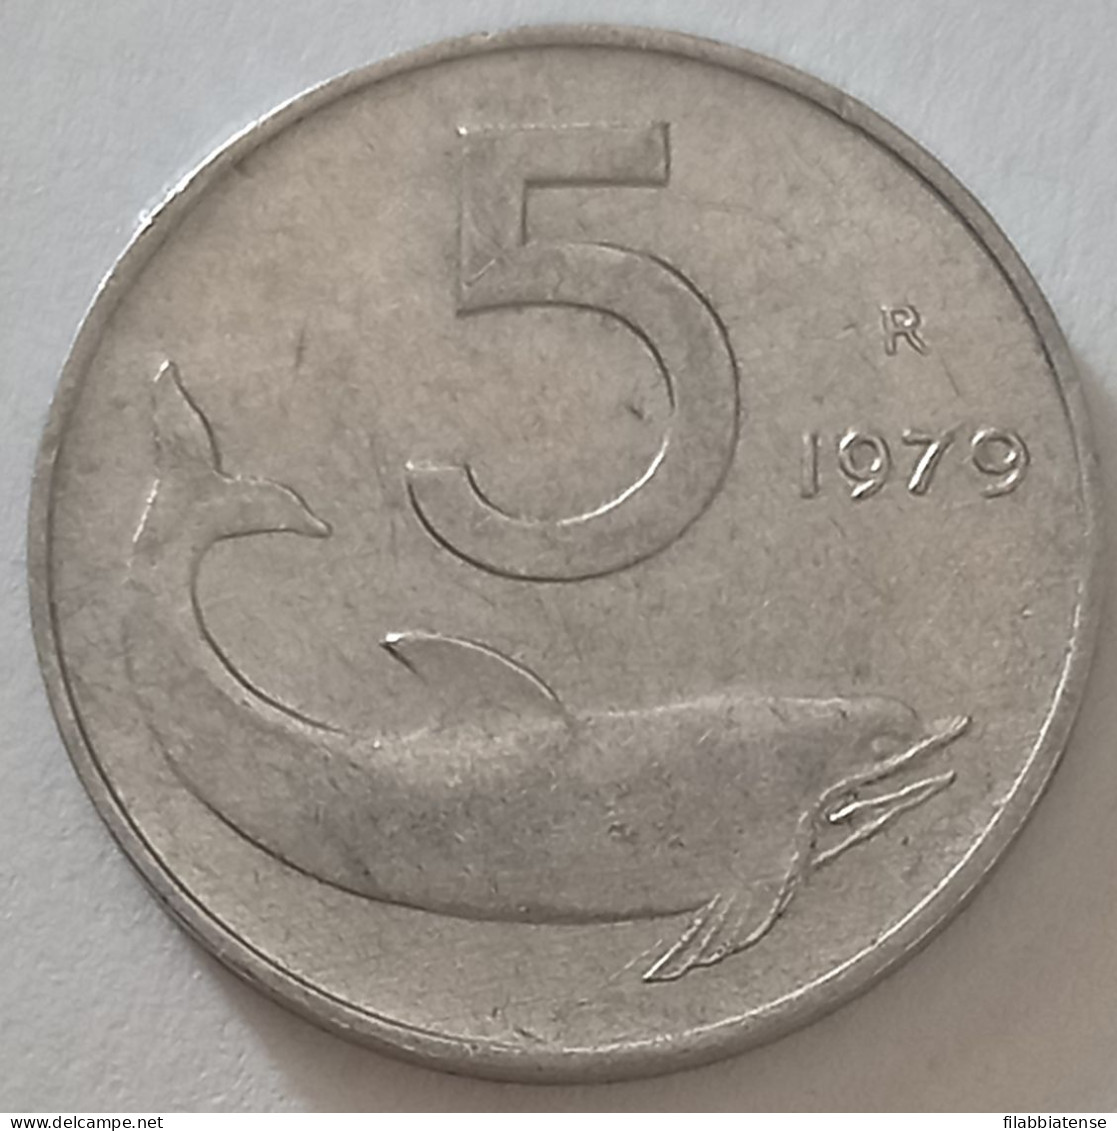 1979 - Italia 5 Lire   ----- - 5 Lire